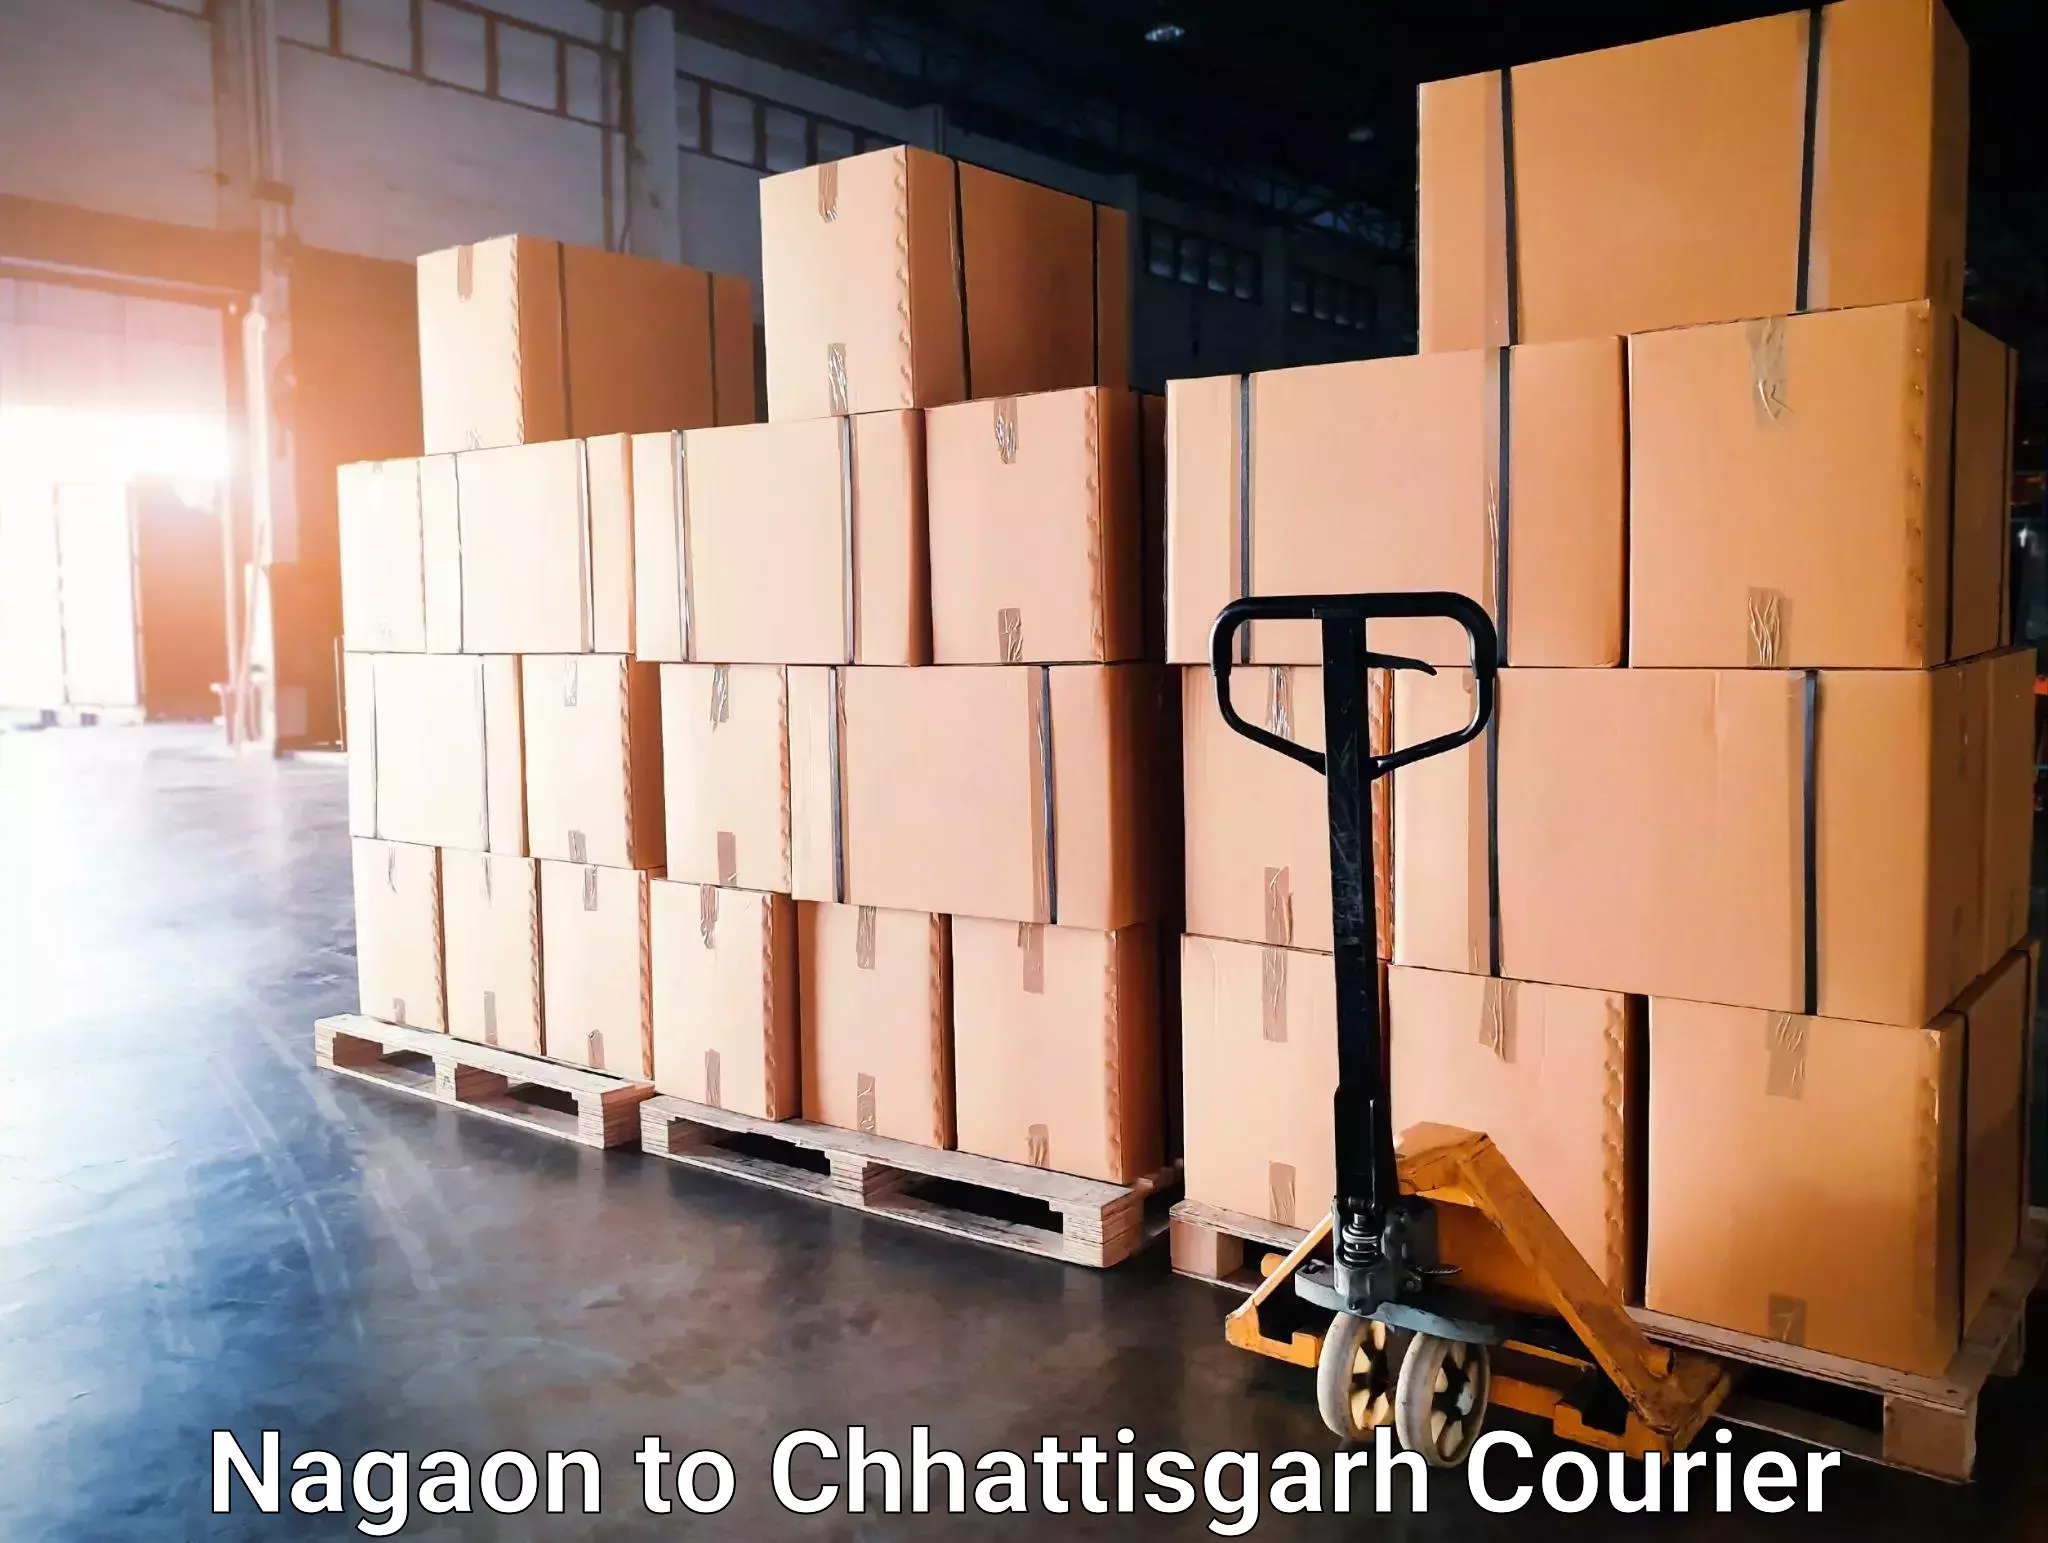 Courier service partnerships Nagaon to Baramkela